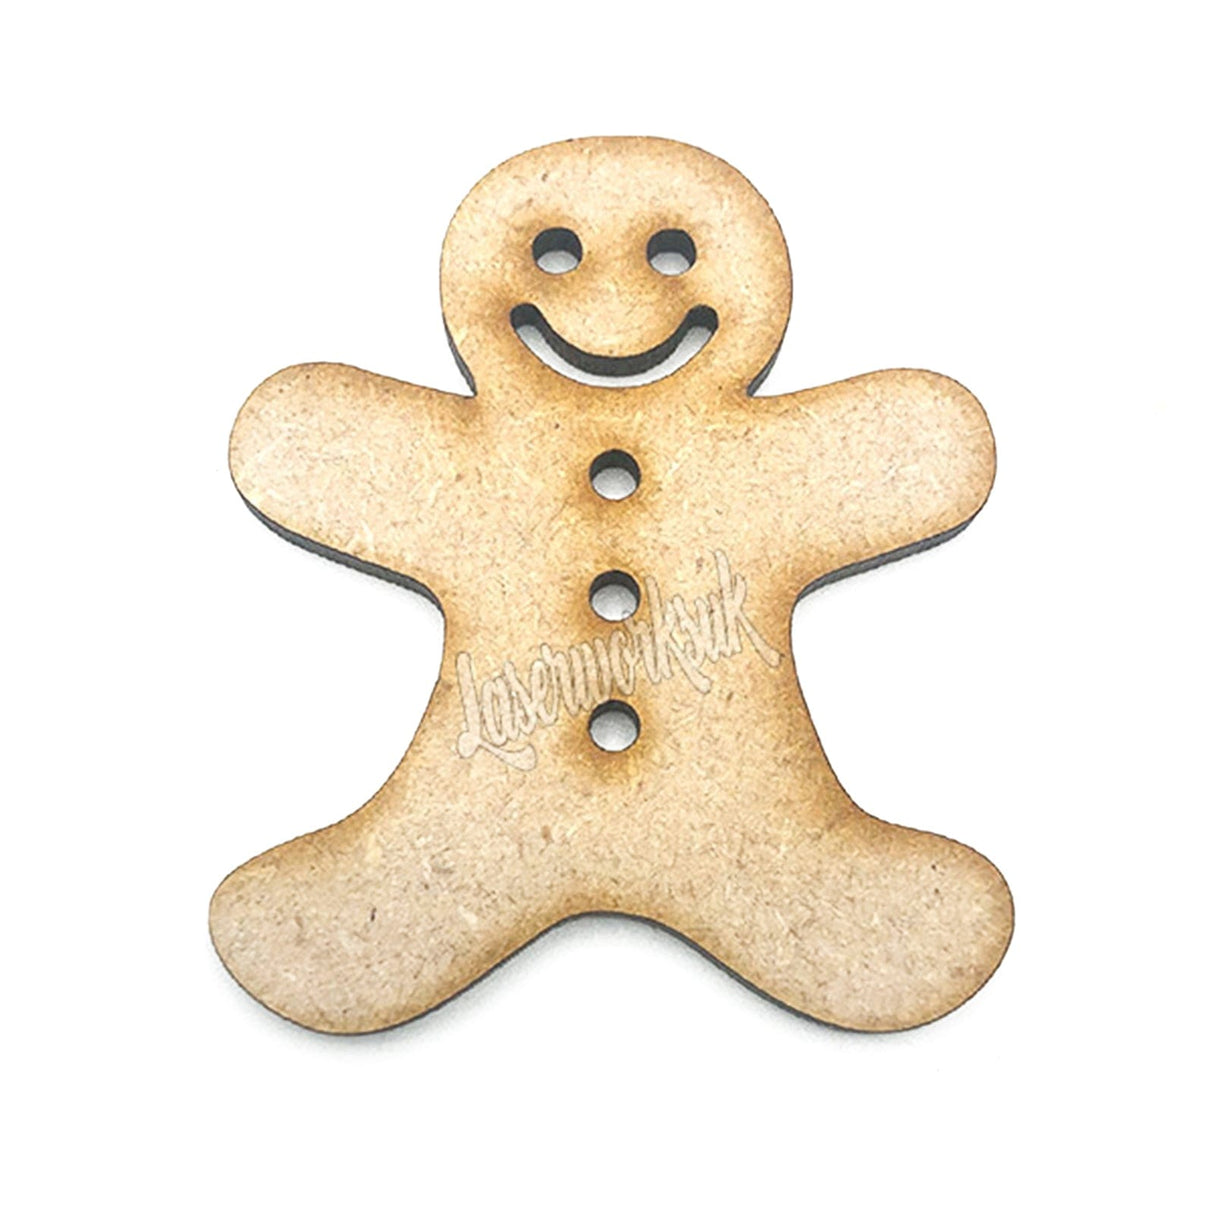 Wooden Gingerbread Man - Craft Shapes - Laserworksuk